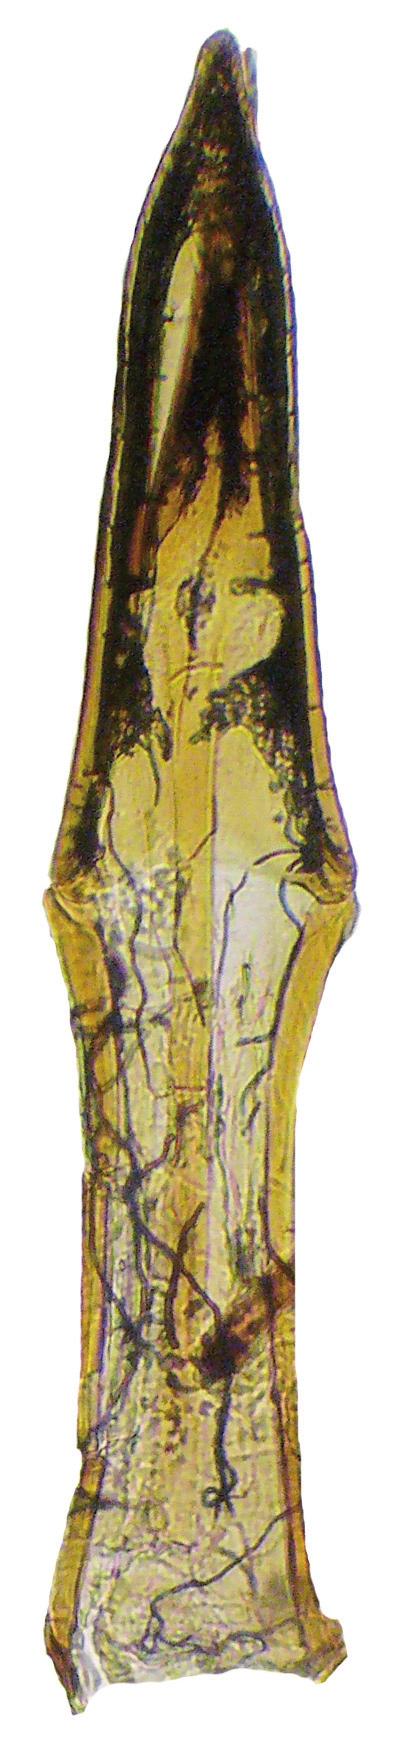 Pronotum subopaque, trapeziform, slightly globose dorsally, with narrow anterior and posterior collars.